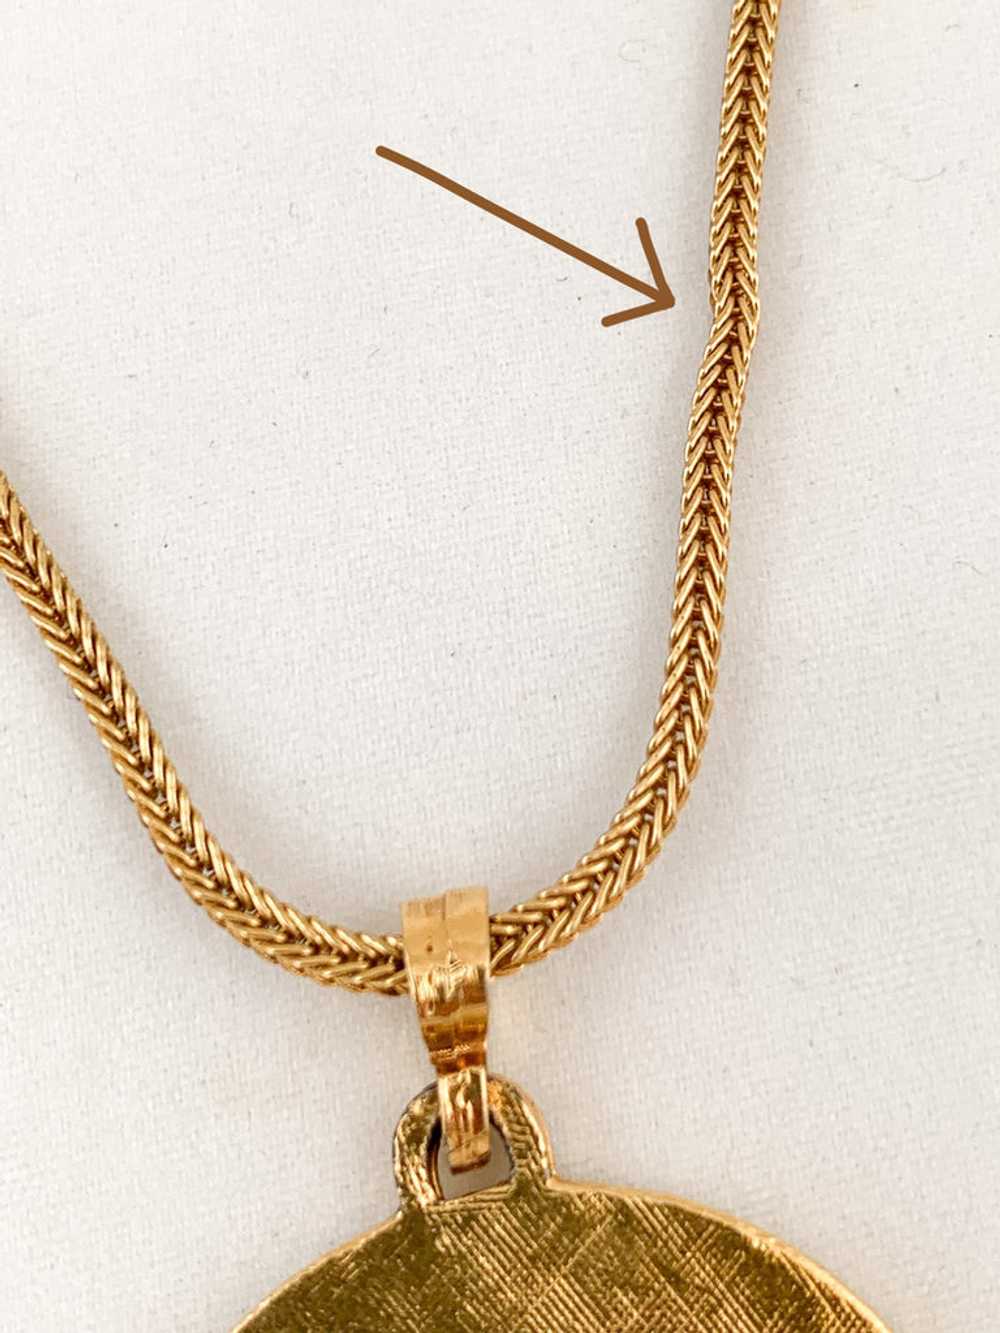 Pierre Cardin Gold Swirl Necklace - image 7